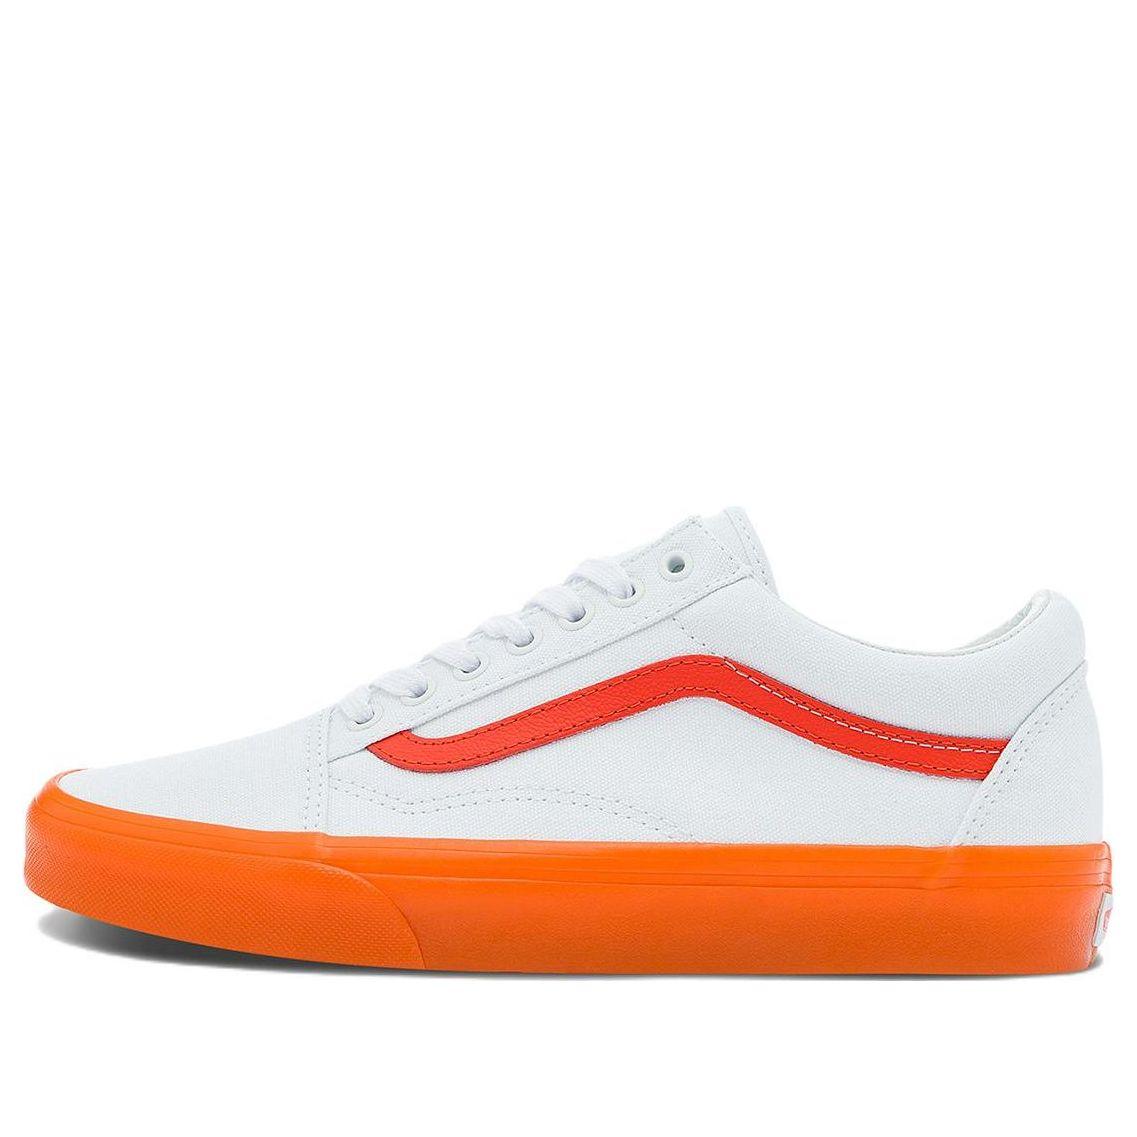 Old Skool Casual Low Top Shoes Orange Side Stripe 'white' | Lyst